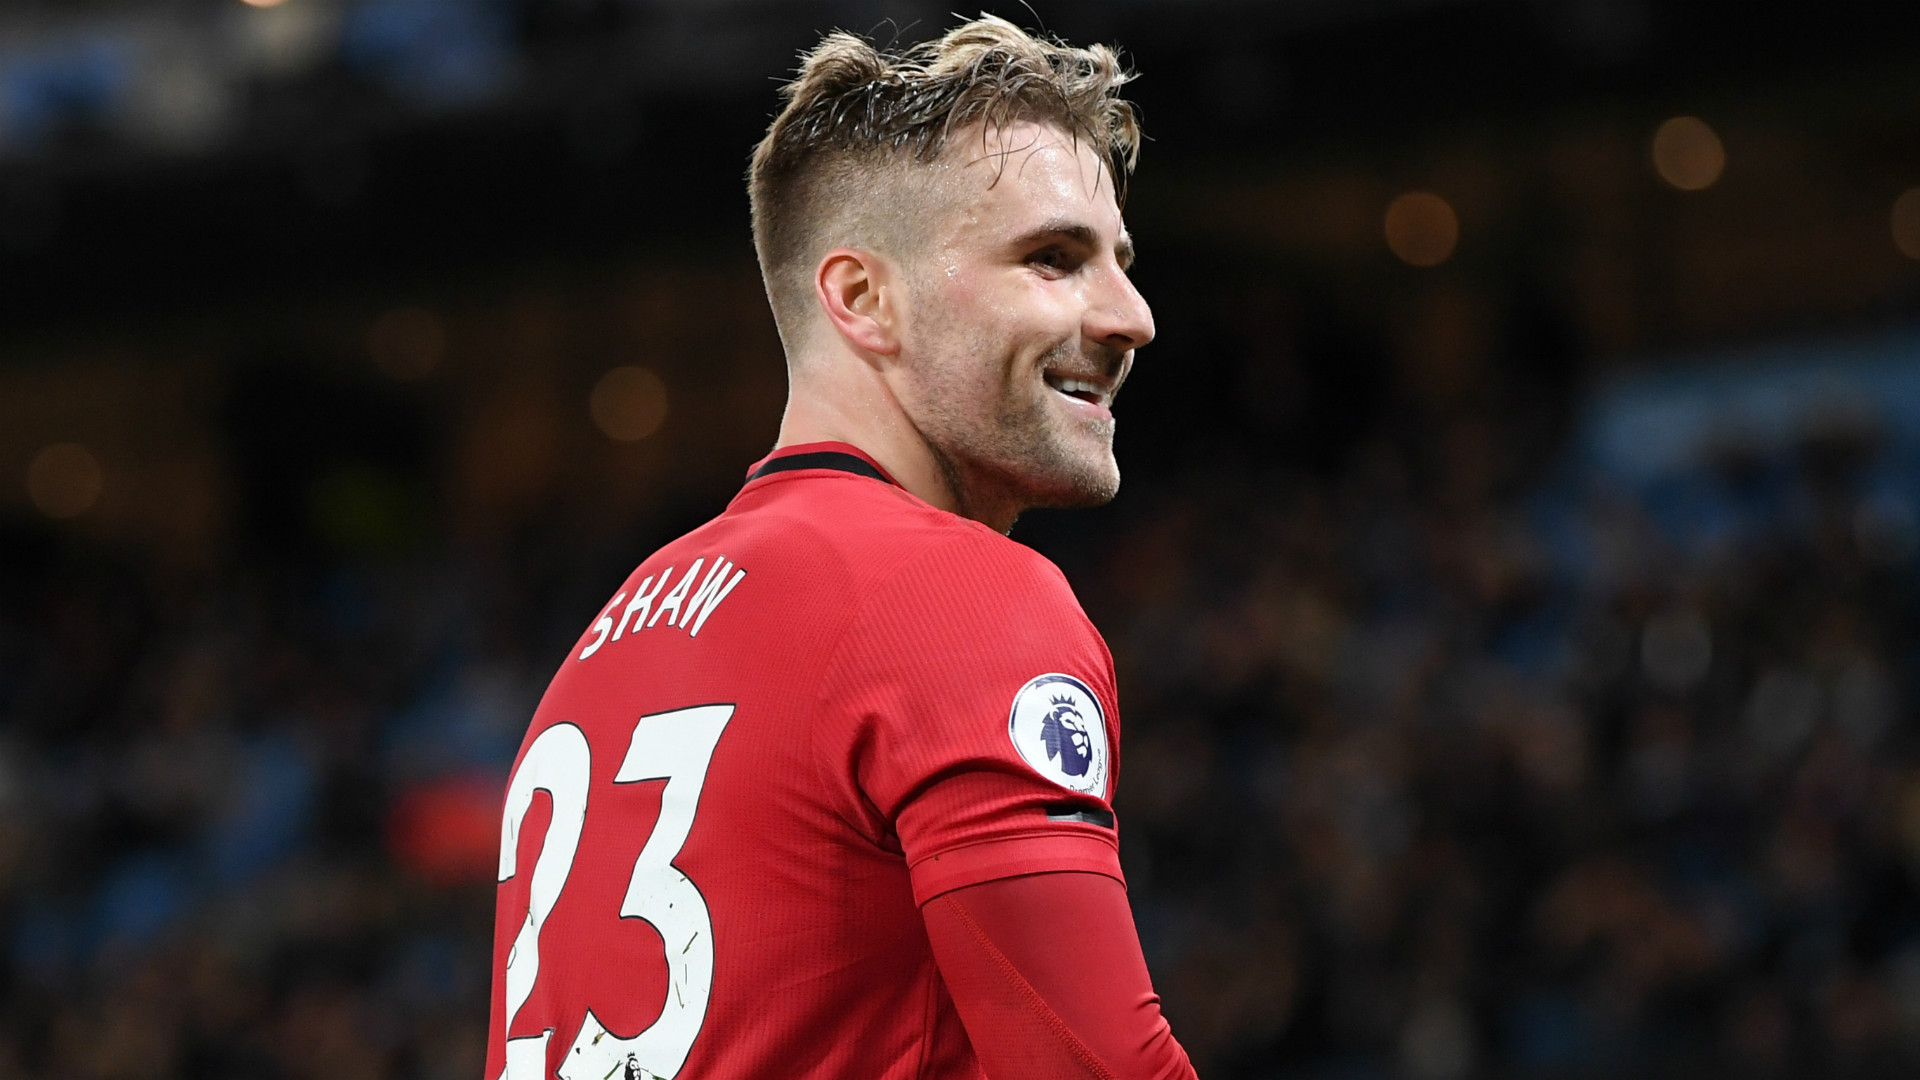 Luke Shaw admits that United players have let Solskjaer down – utdreport